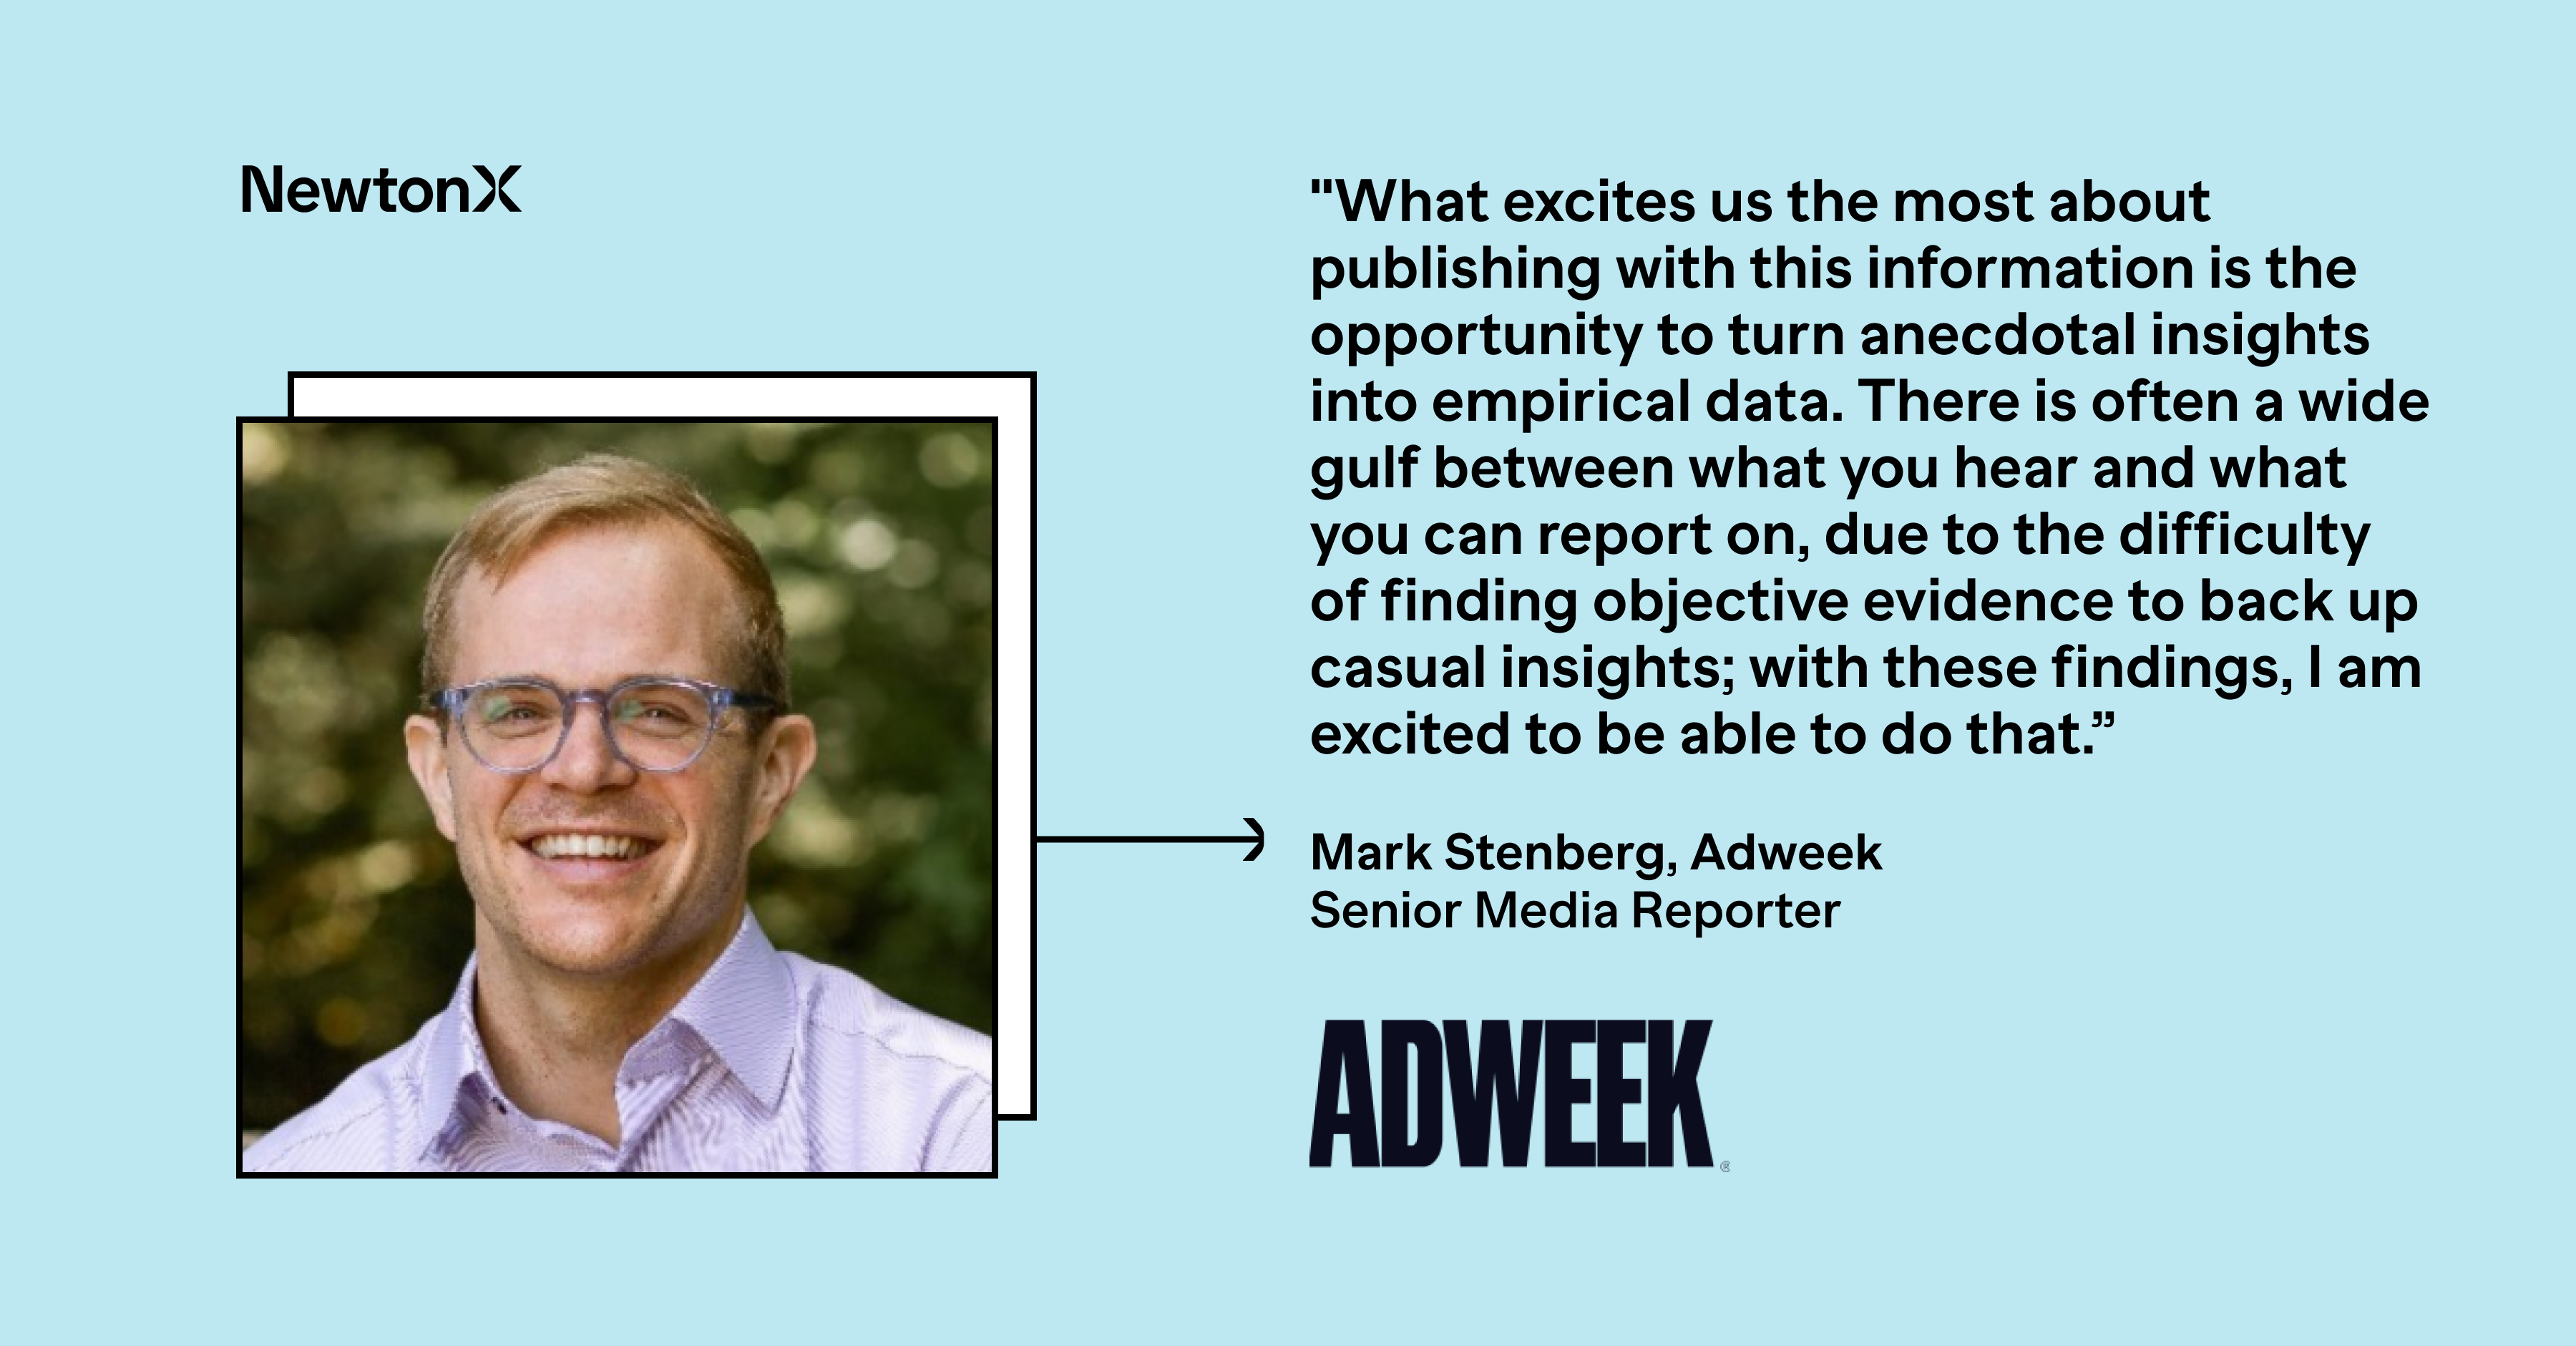 Mark Stenberg, Senior Media Reporter, Adweek